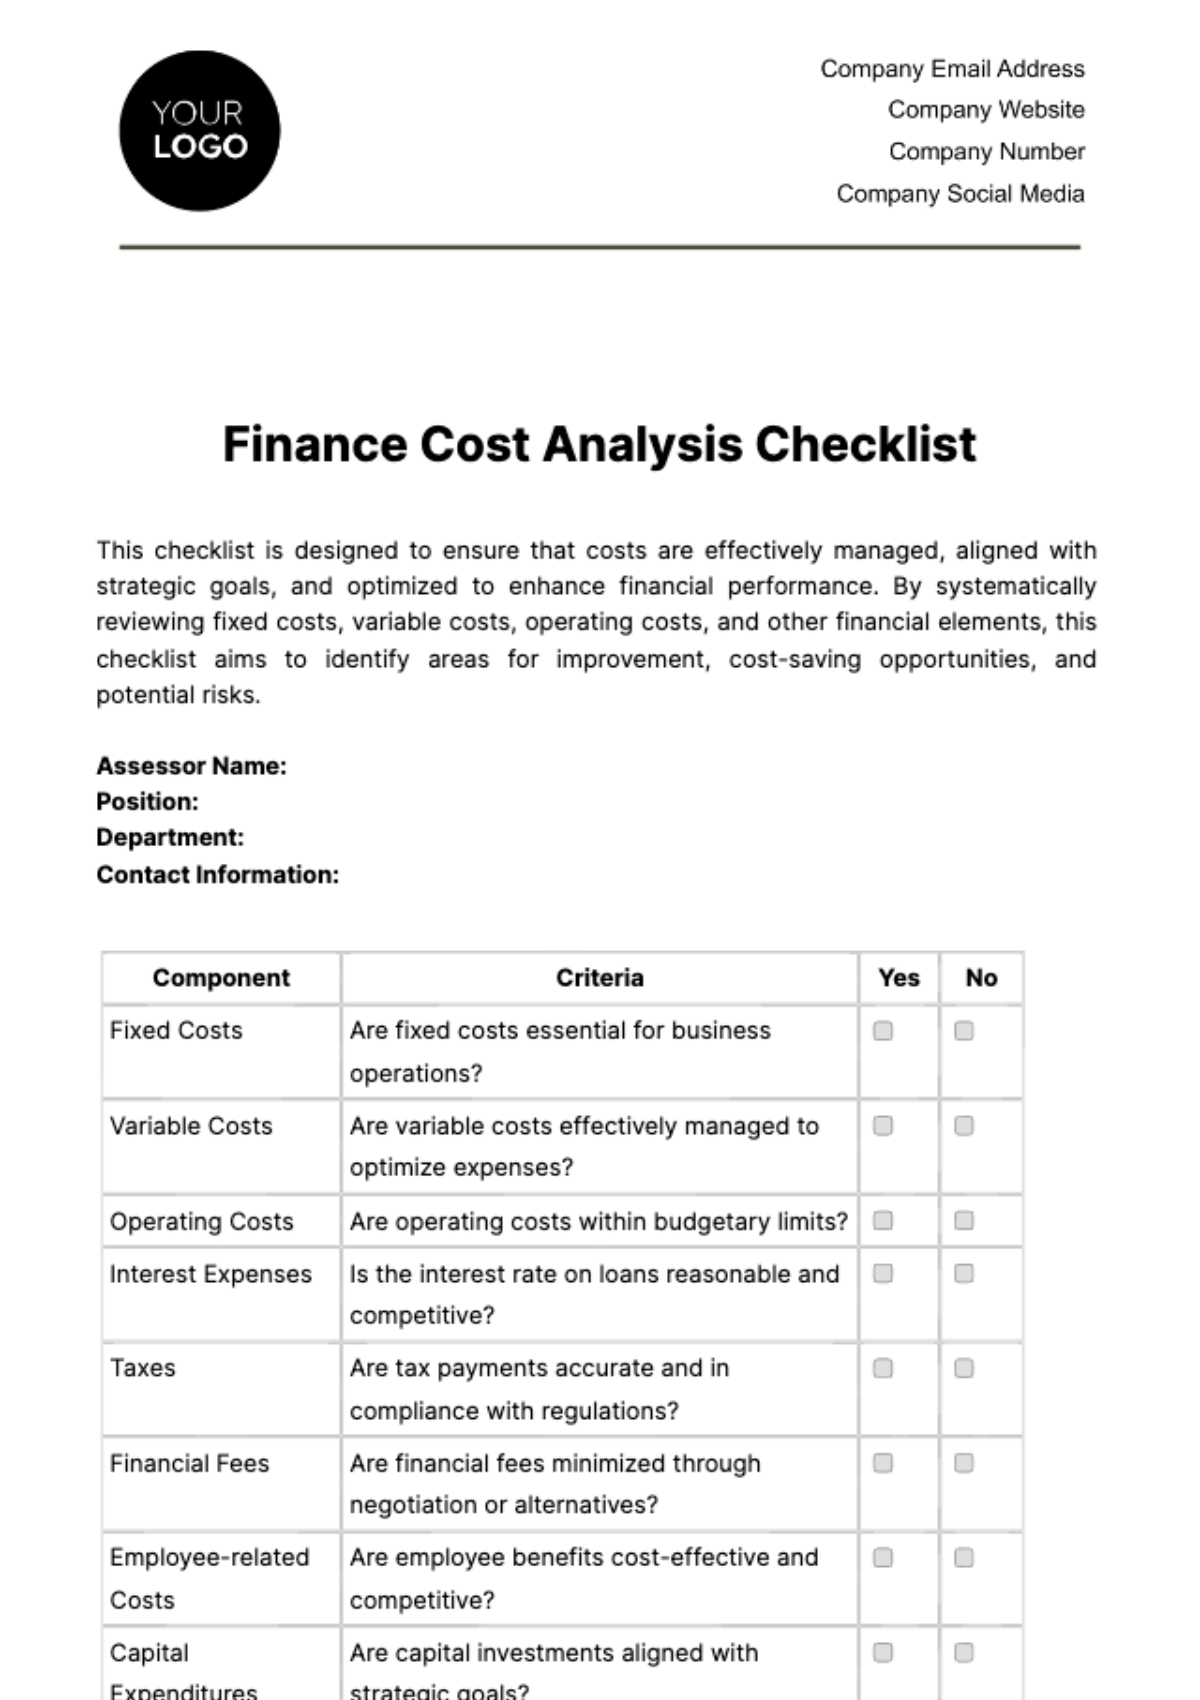 Free Finance Cost Analysis Checklist Template